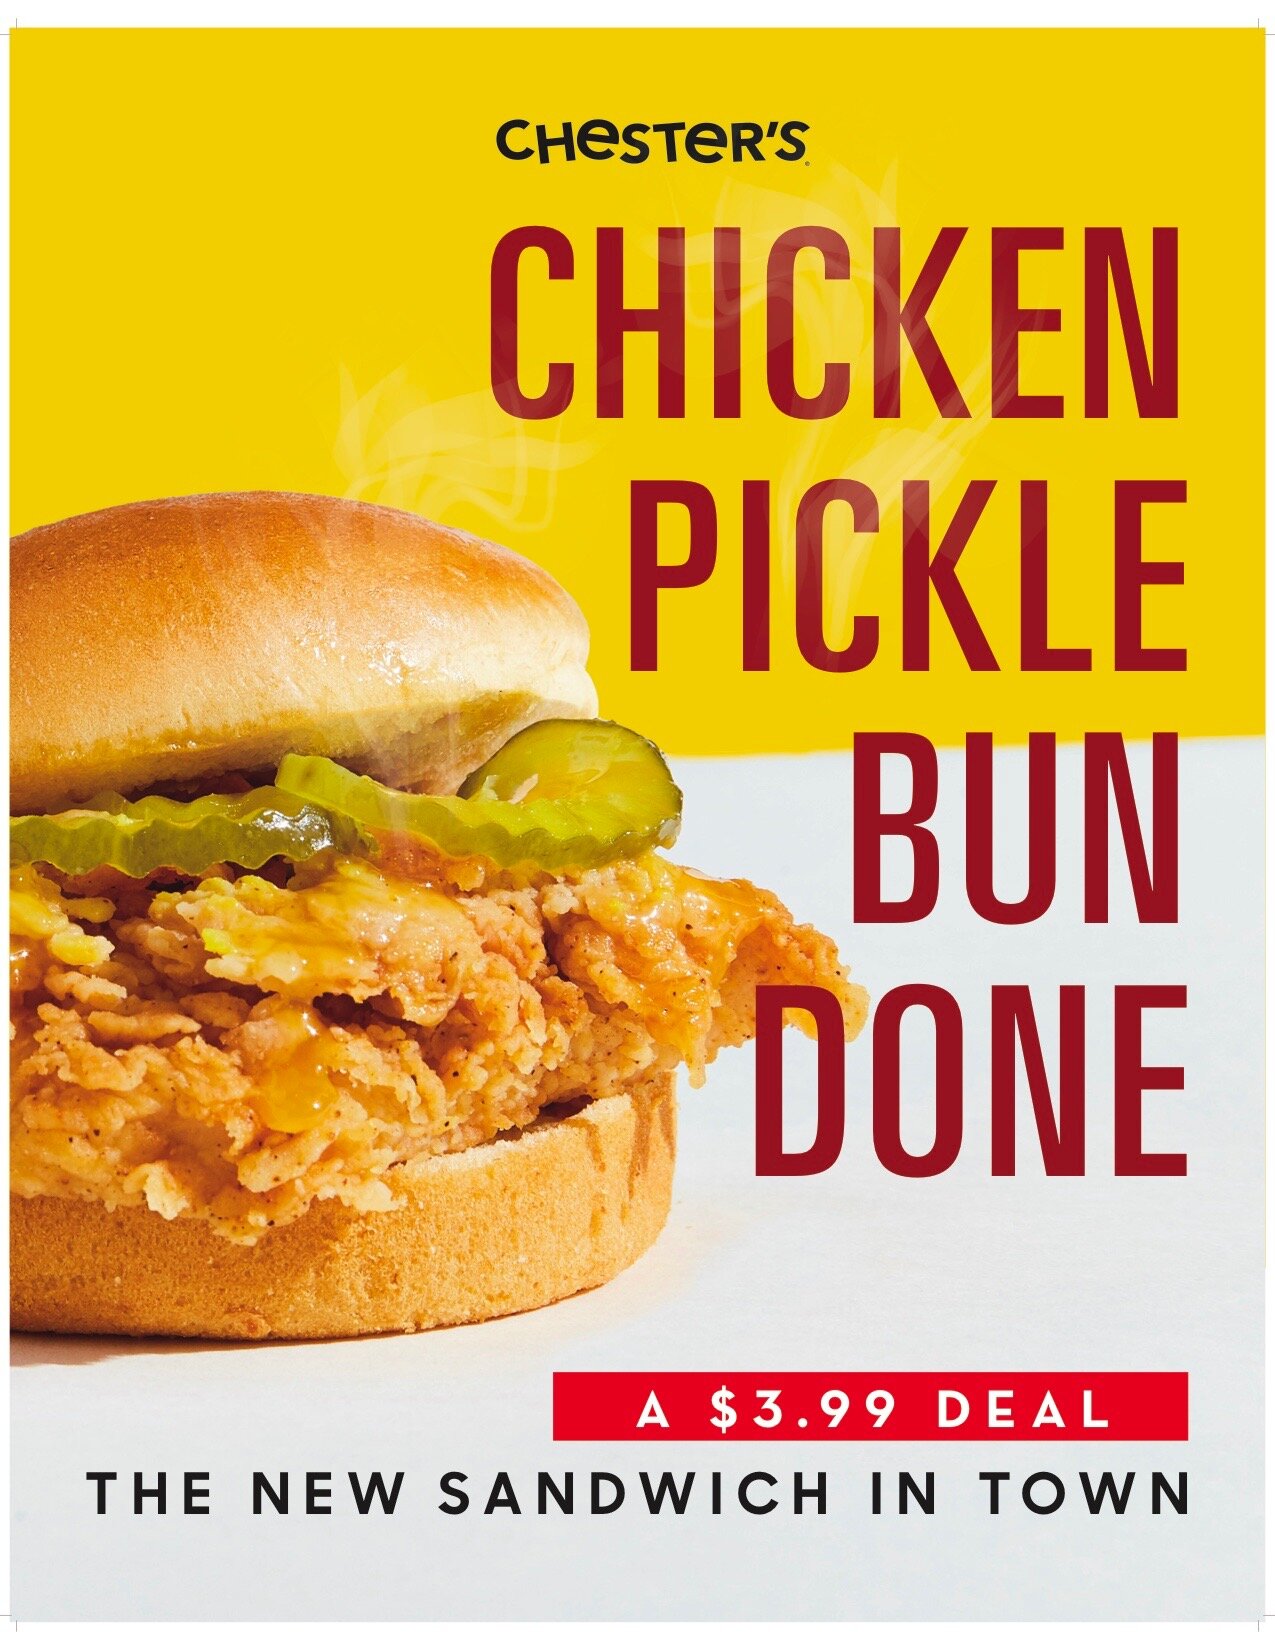 CC-0169—19 Q3 POP LTO Fried Chicken Sandwich—Wall Poster—22x28.jpg